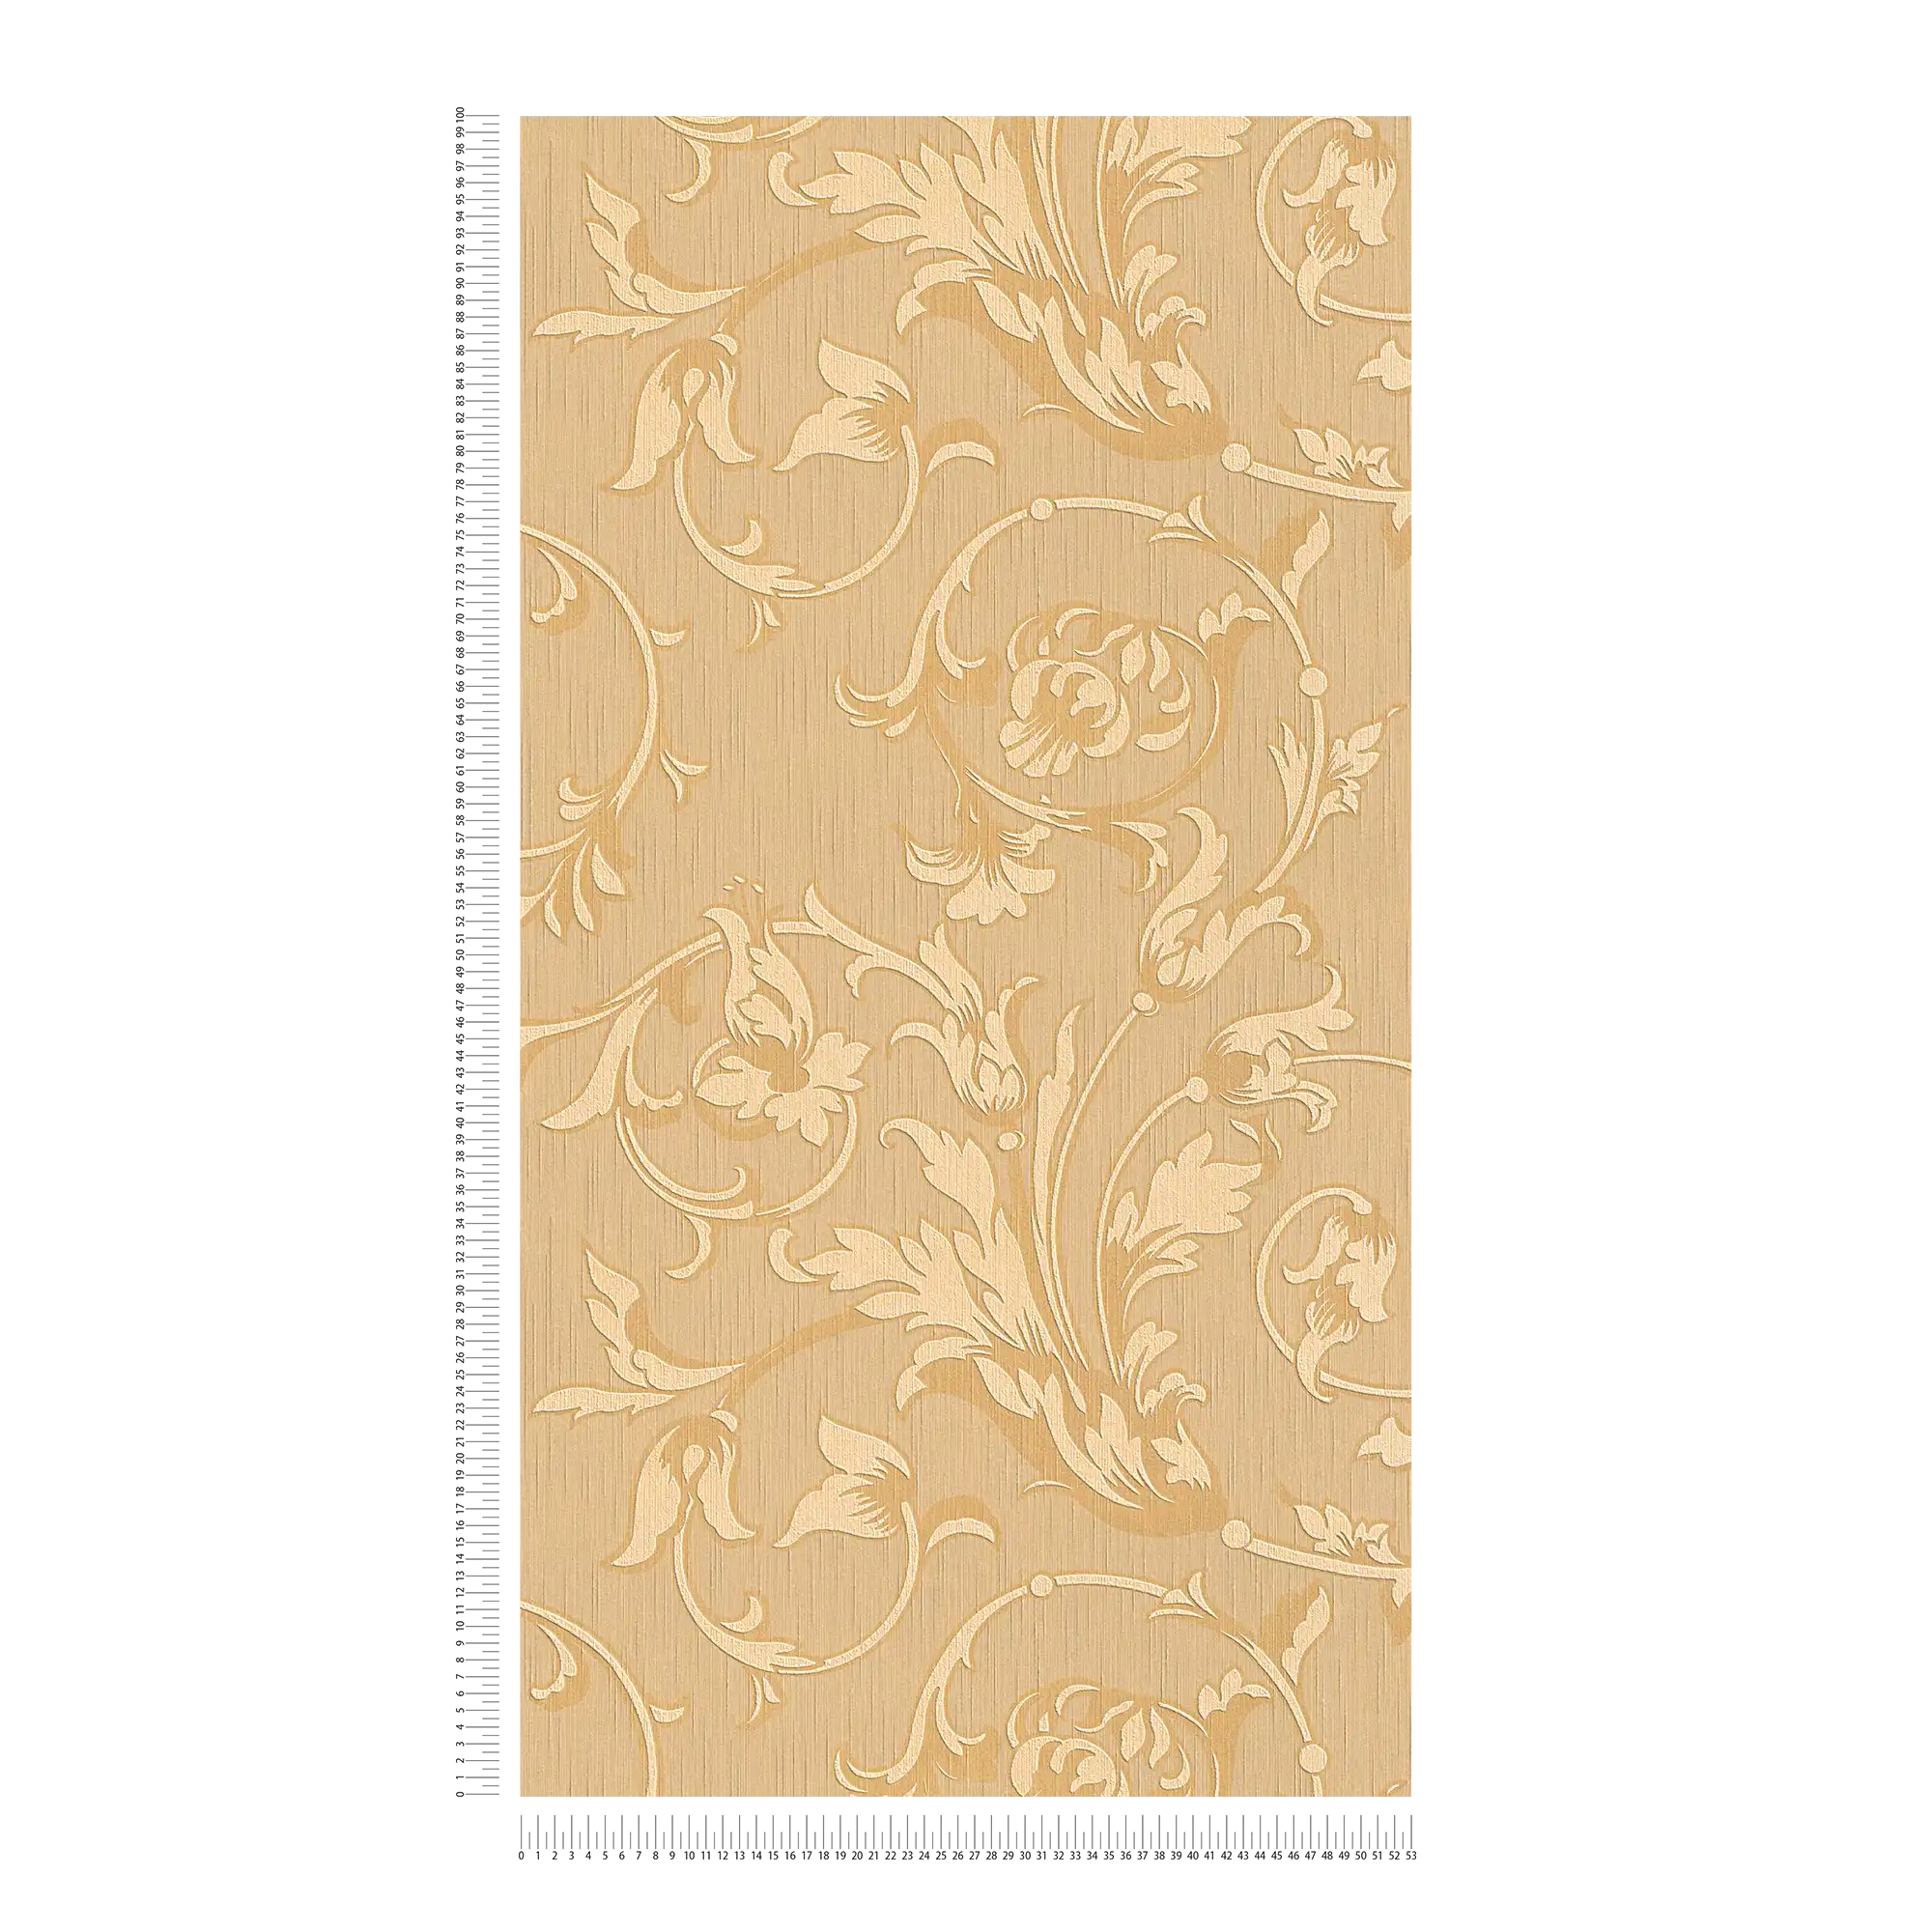             Baroque wallpaper with ornaments silk textile look - orange, beige
        